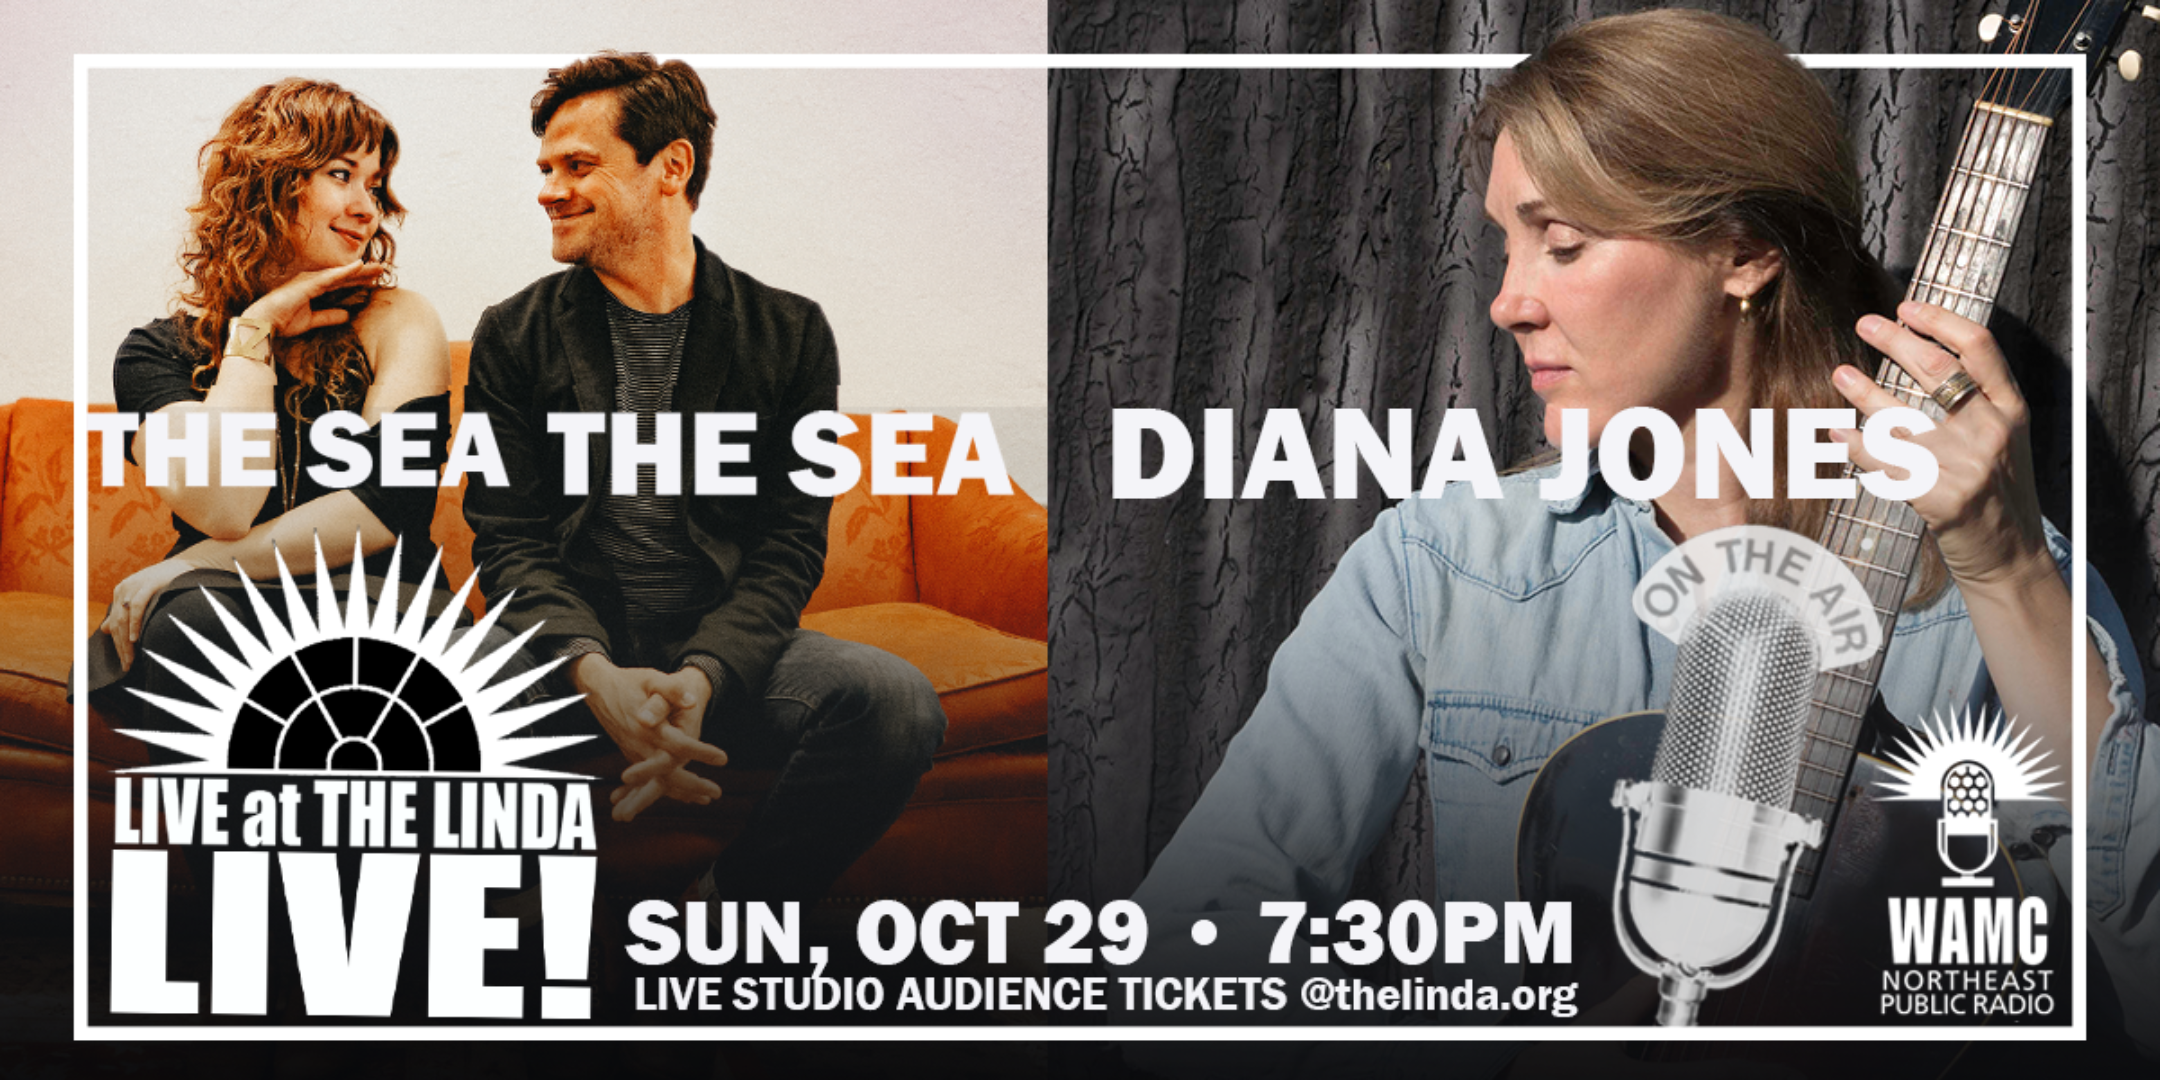 Live at The Linda Live! The Sea The Sea & Diana Jones